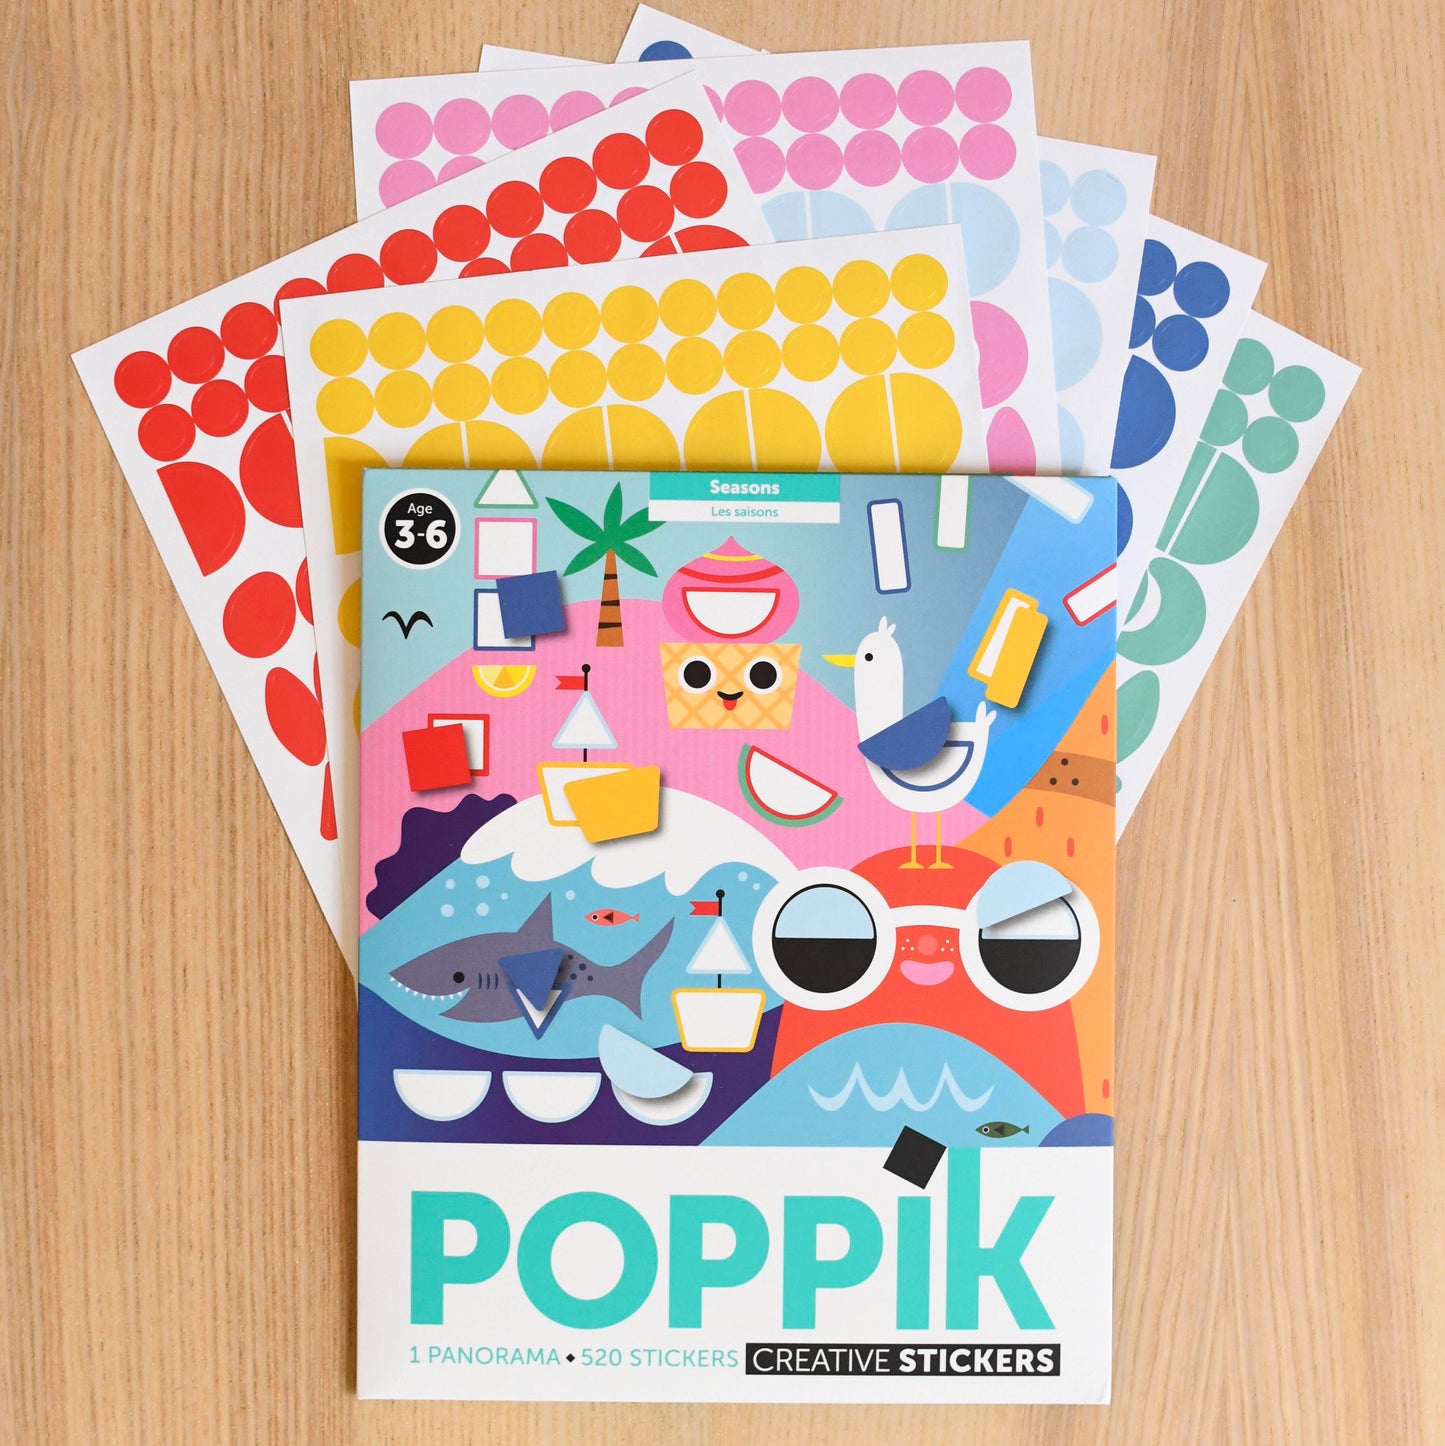 Poppik - Seasons  Sticker Panorama Poster